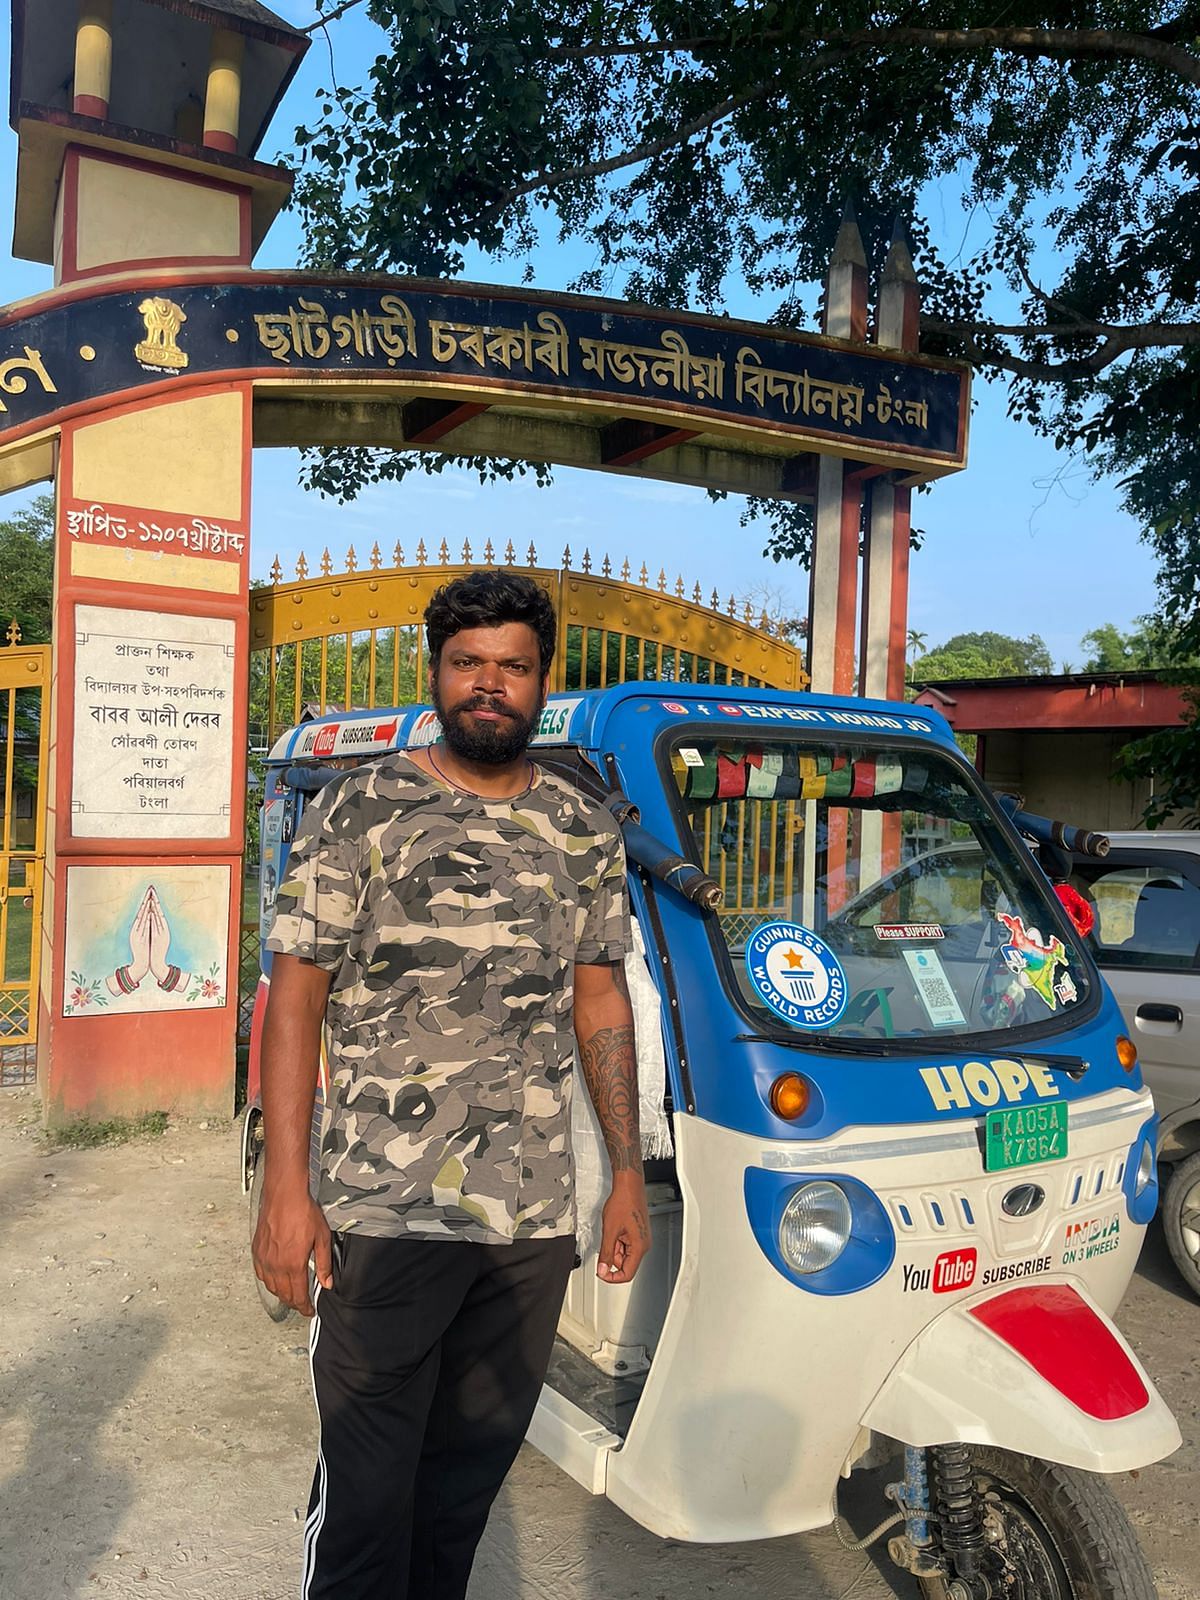 Jothi Viknesh started his journey from Vidhana Soudha in Bengaluru on December 5, 2021.